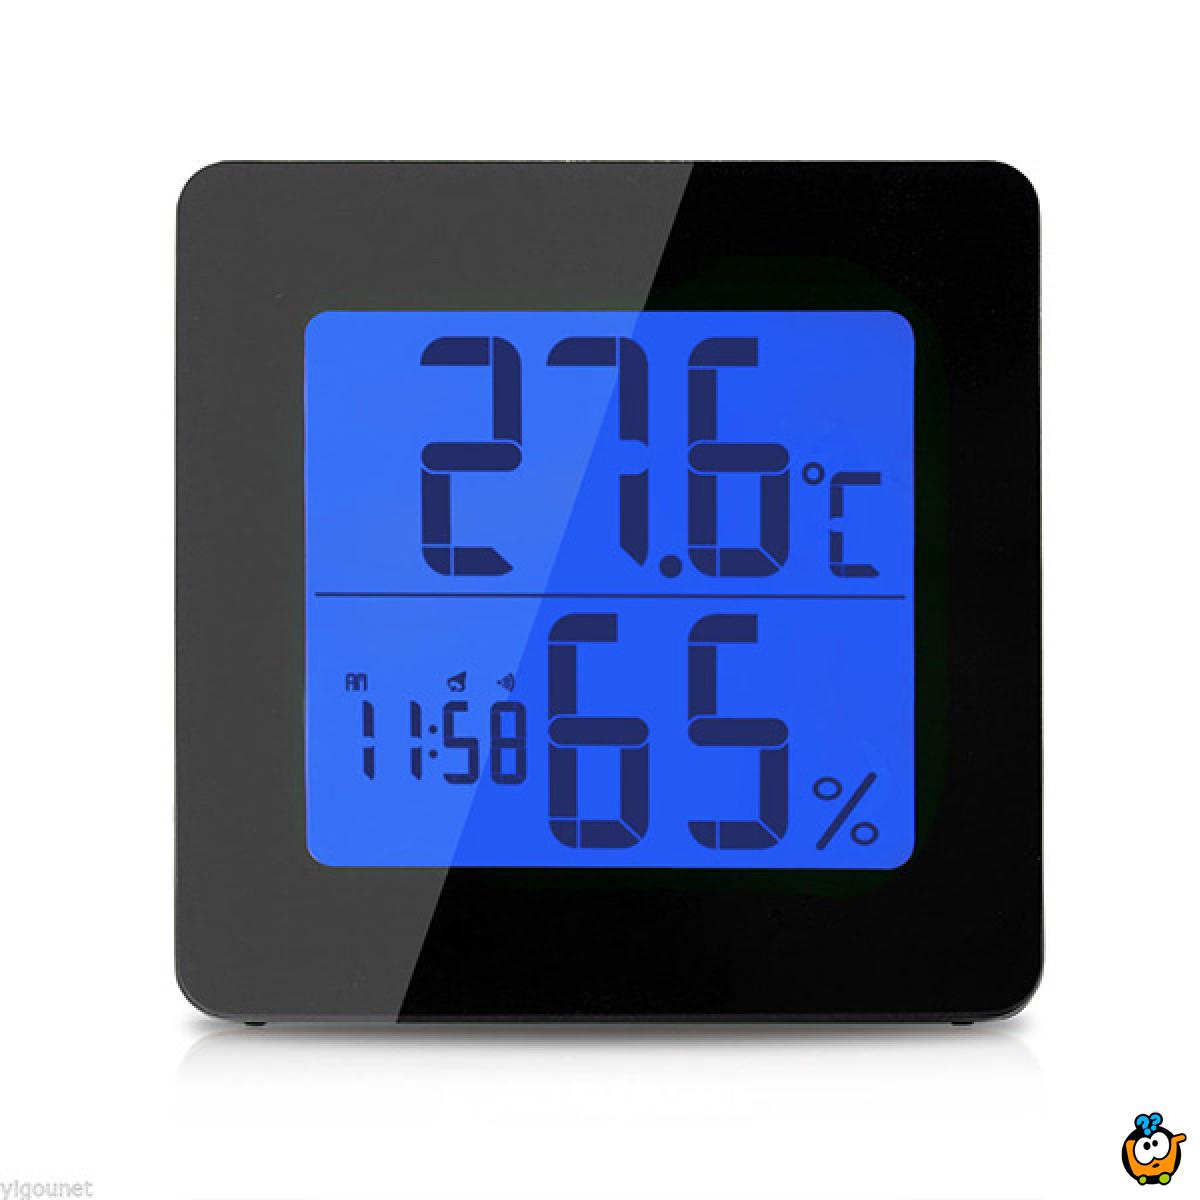 Emate - Digitalni termometar, merač vlažnosti, sat + alarm